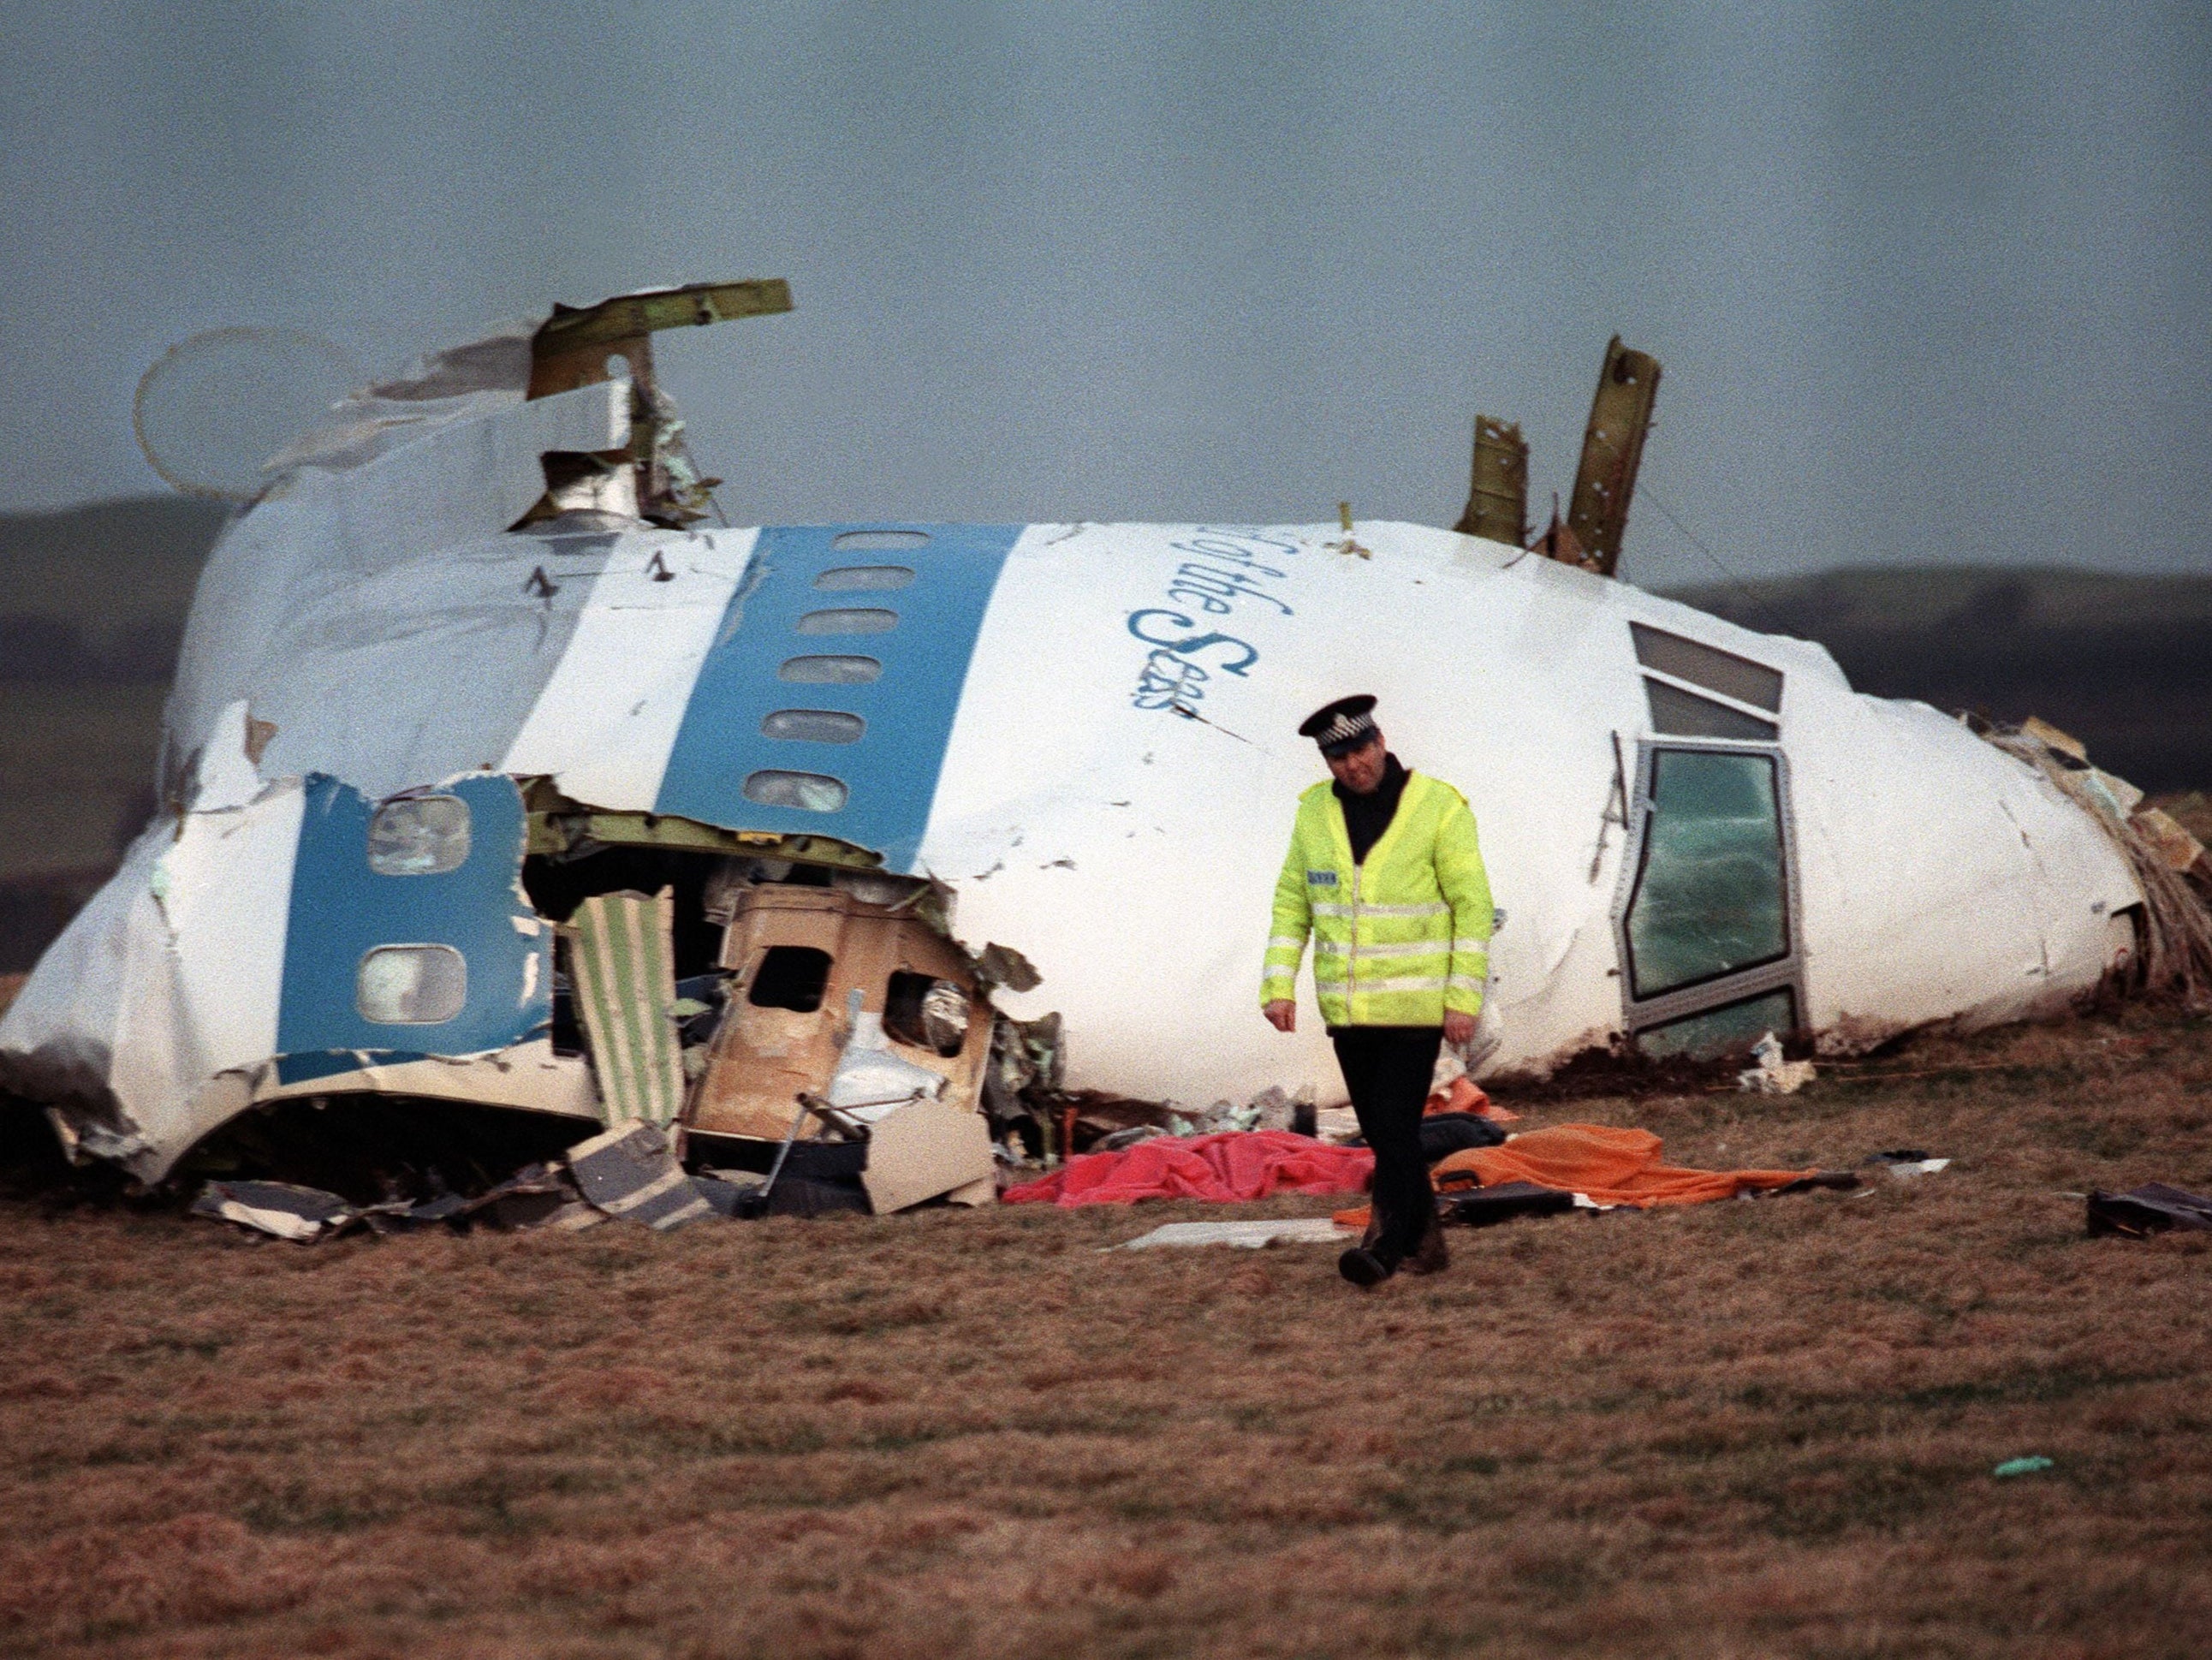 Pan Am flight 103 was brought down over Lockerbie, Scotland, in 1988, killing 270 people